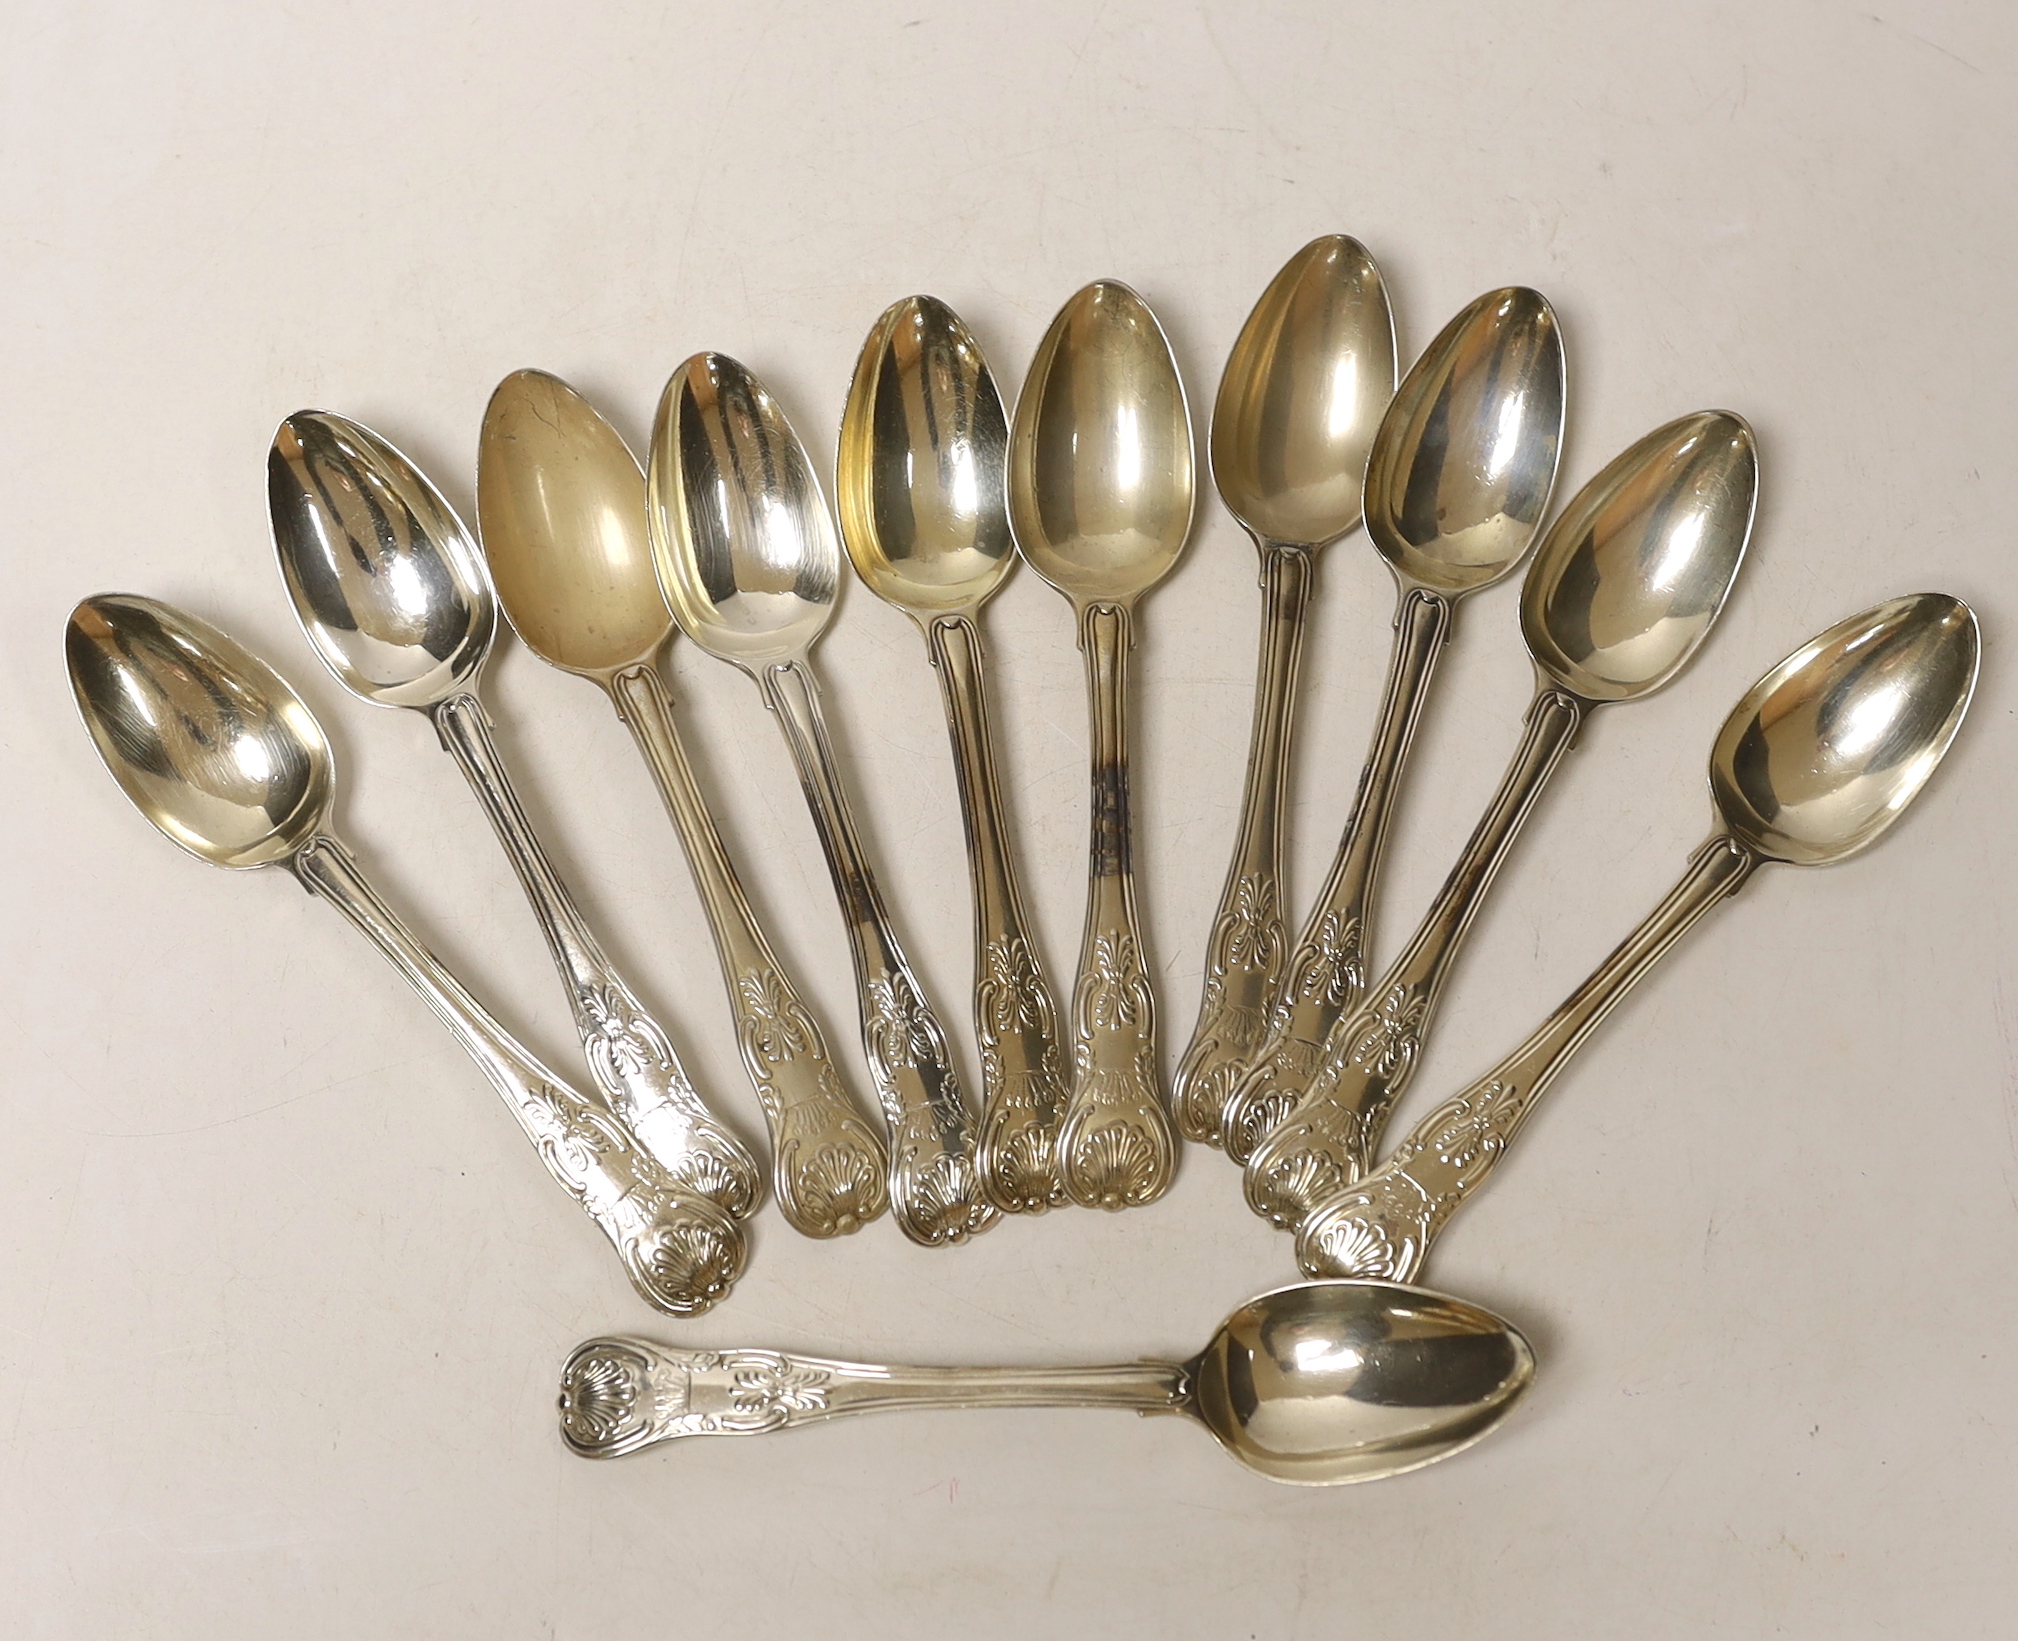 Eleven George IV silver Kings honeysuckle pattern teaspoons, William Chawner II, London, 1820, 12.8oz, with engraved crest.